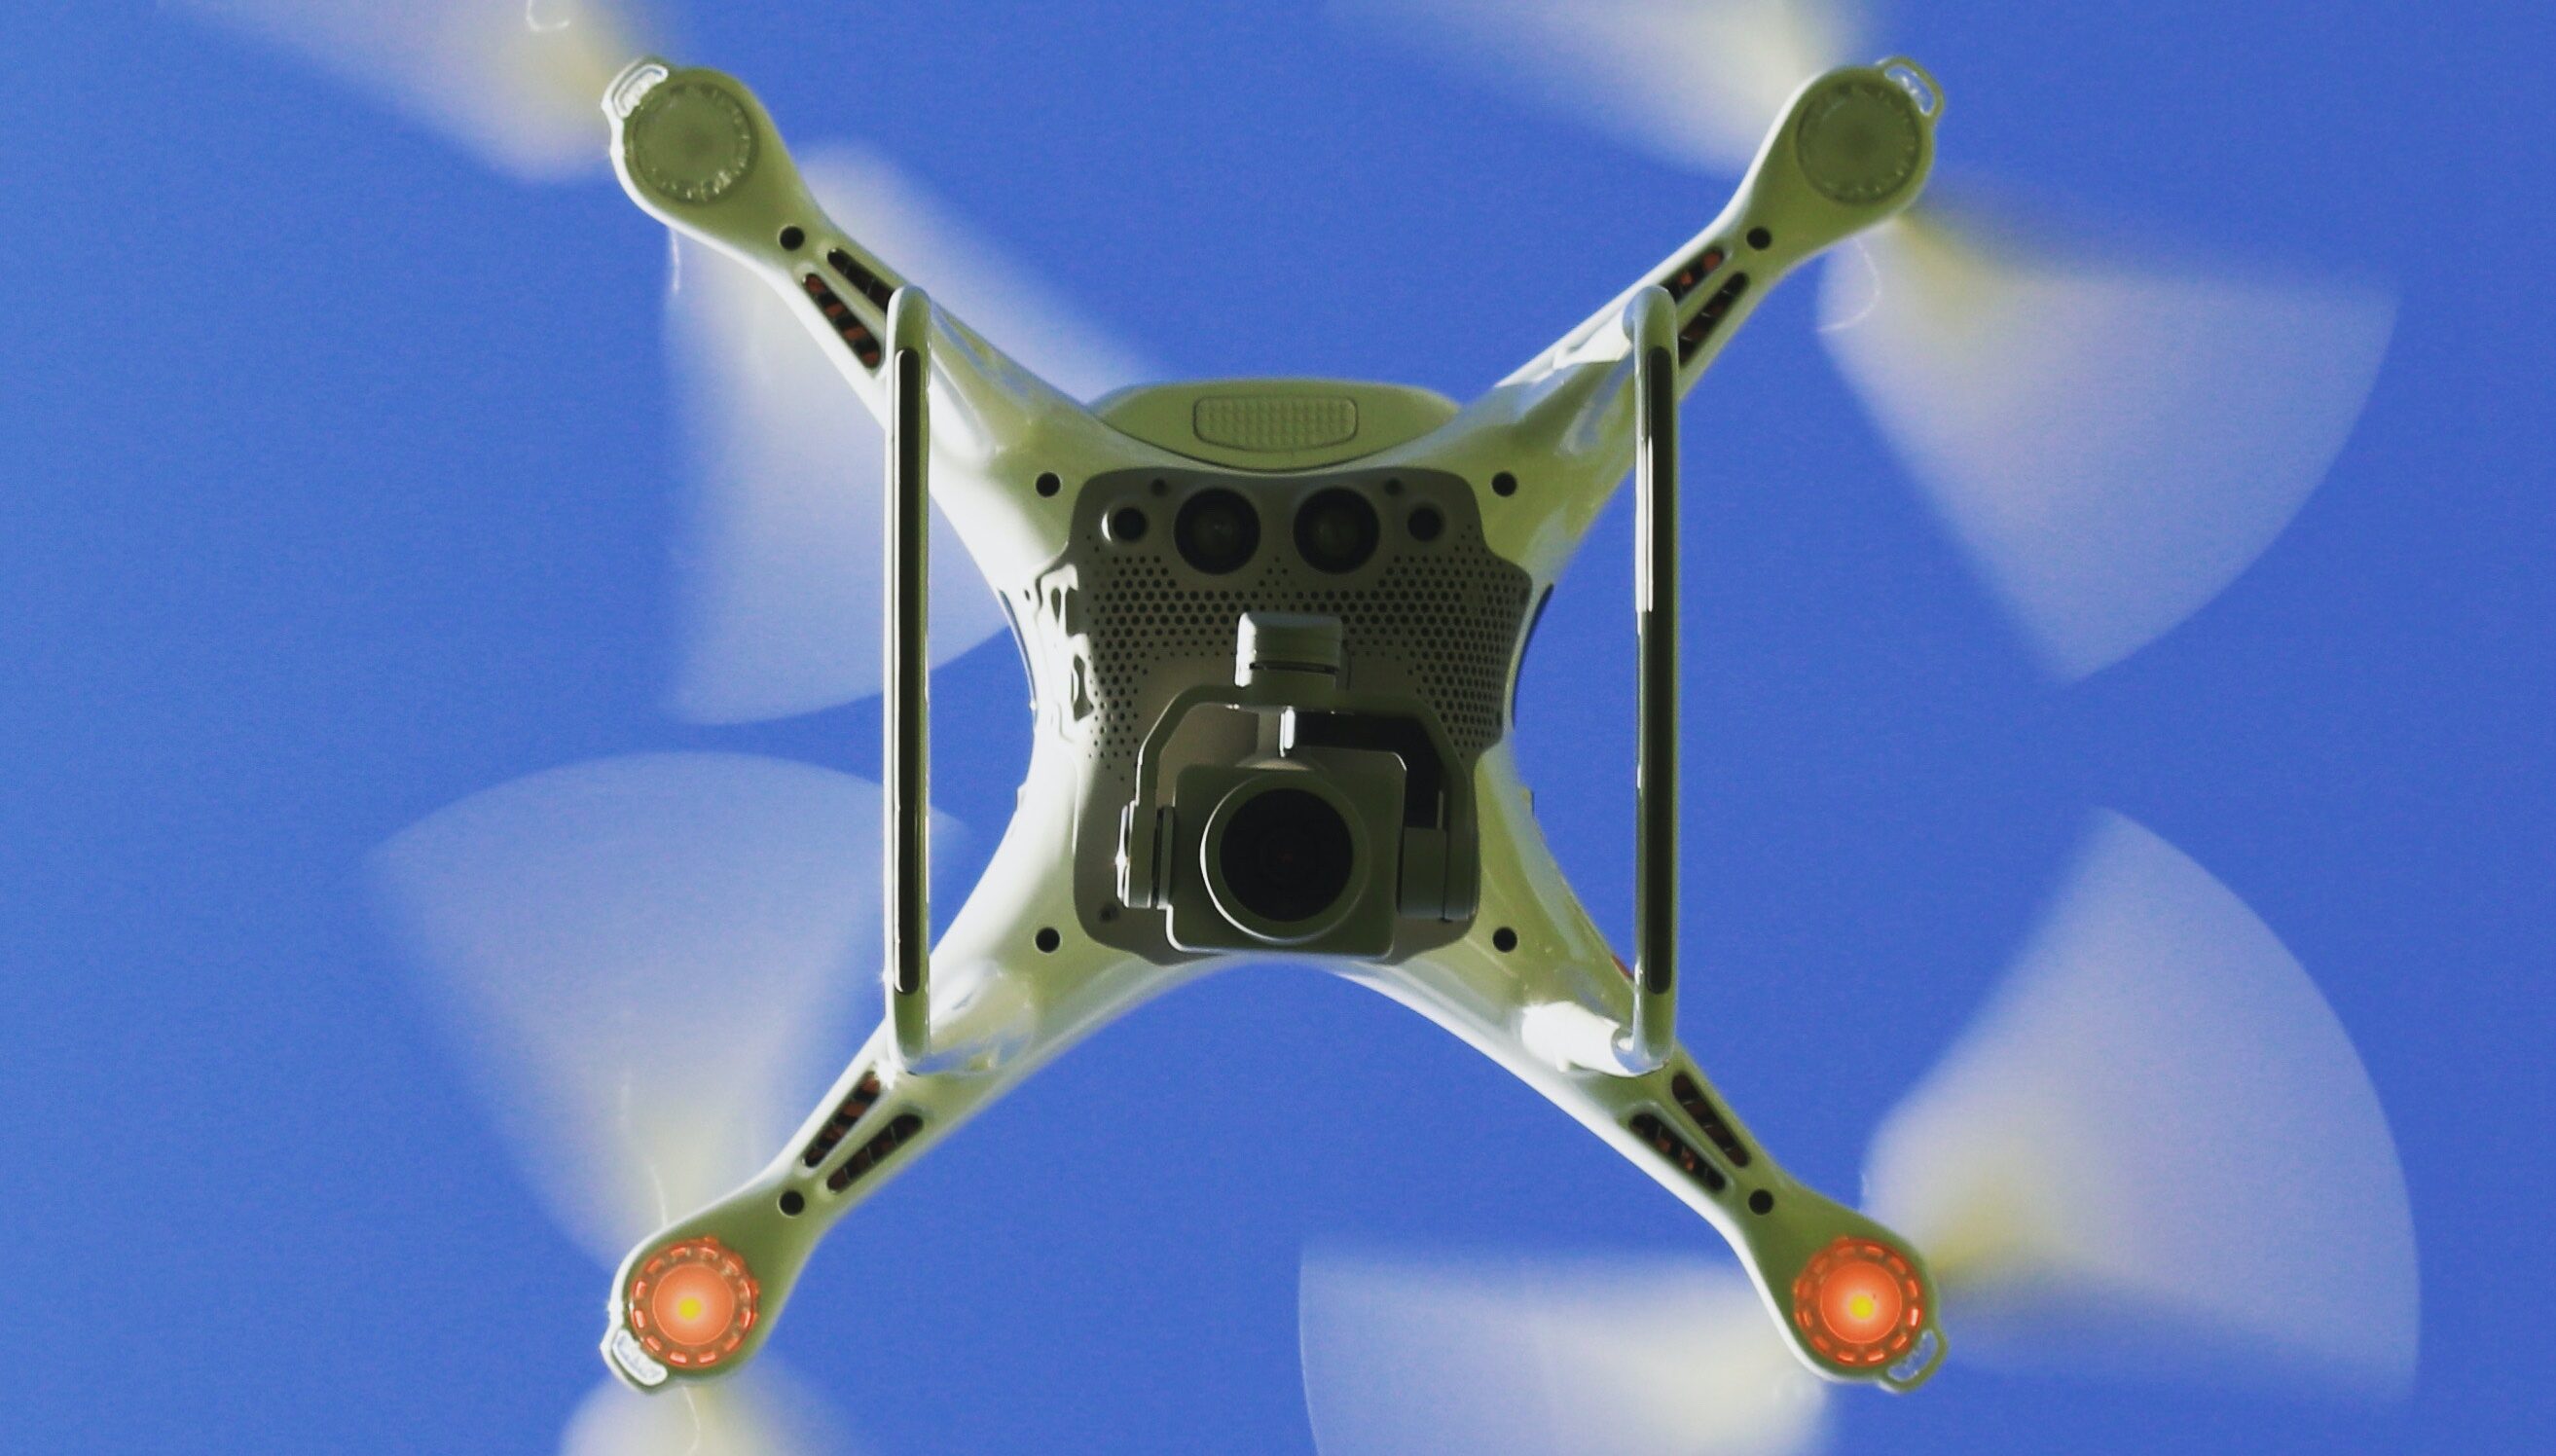 KI-Überwachung: Tracking per Drohne rückt näher